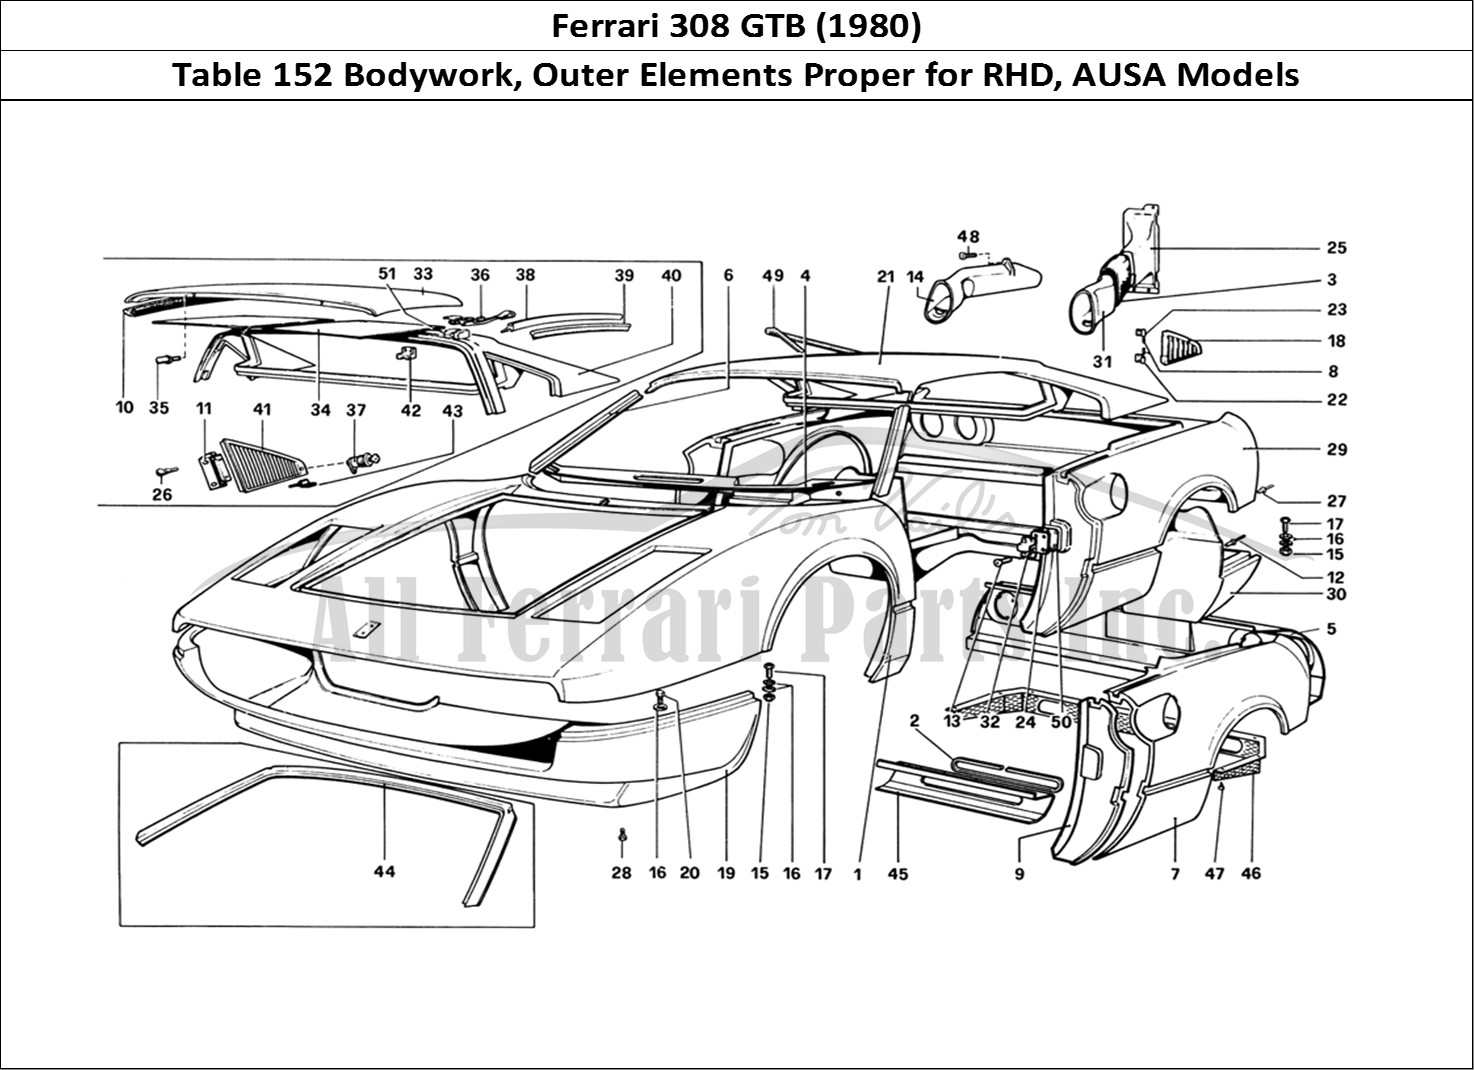 Ferrari Parts Ferrari 308 GTB (1980) Page 152 Body Shell - Outer Elemen